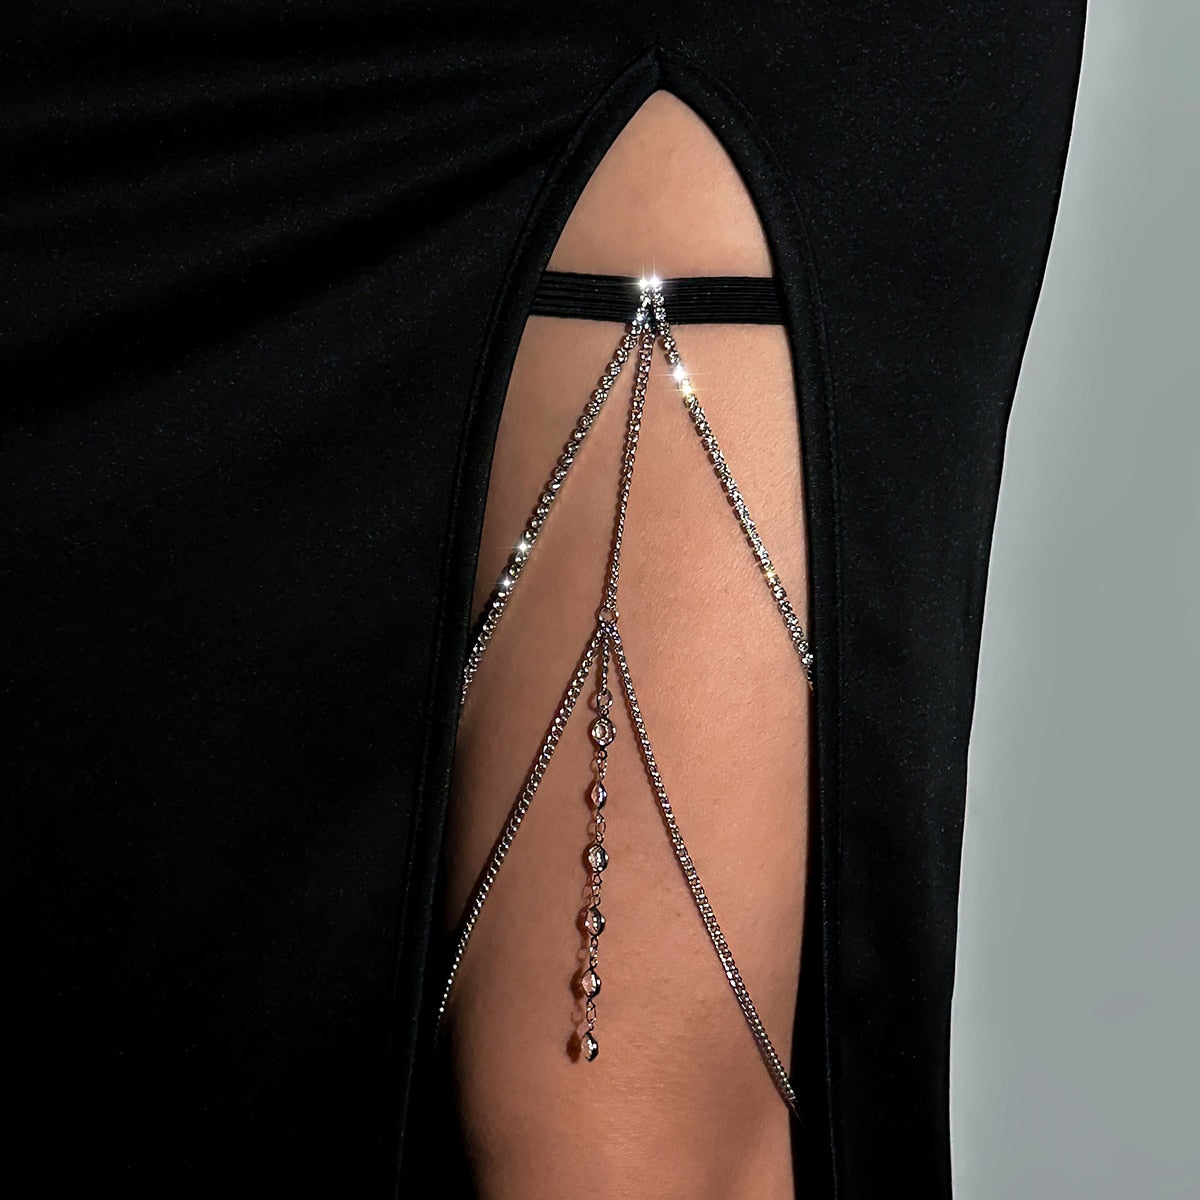 Maytrends Bohemian Crystal Glass Pendant Tassel Thigh Chain Sexy Rhinestone Double Leg Chain Bikini Beach Summer Body Jewelry